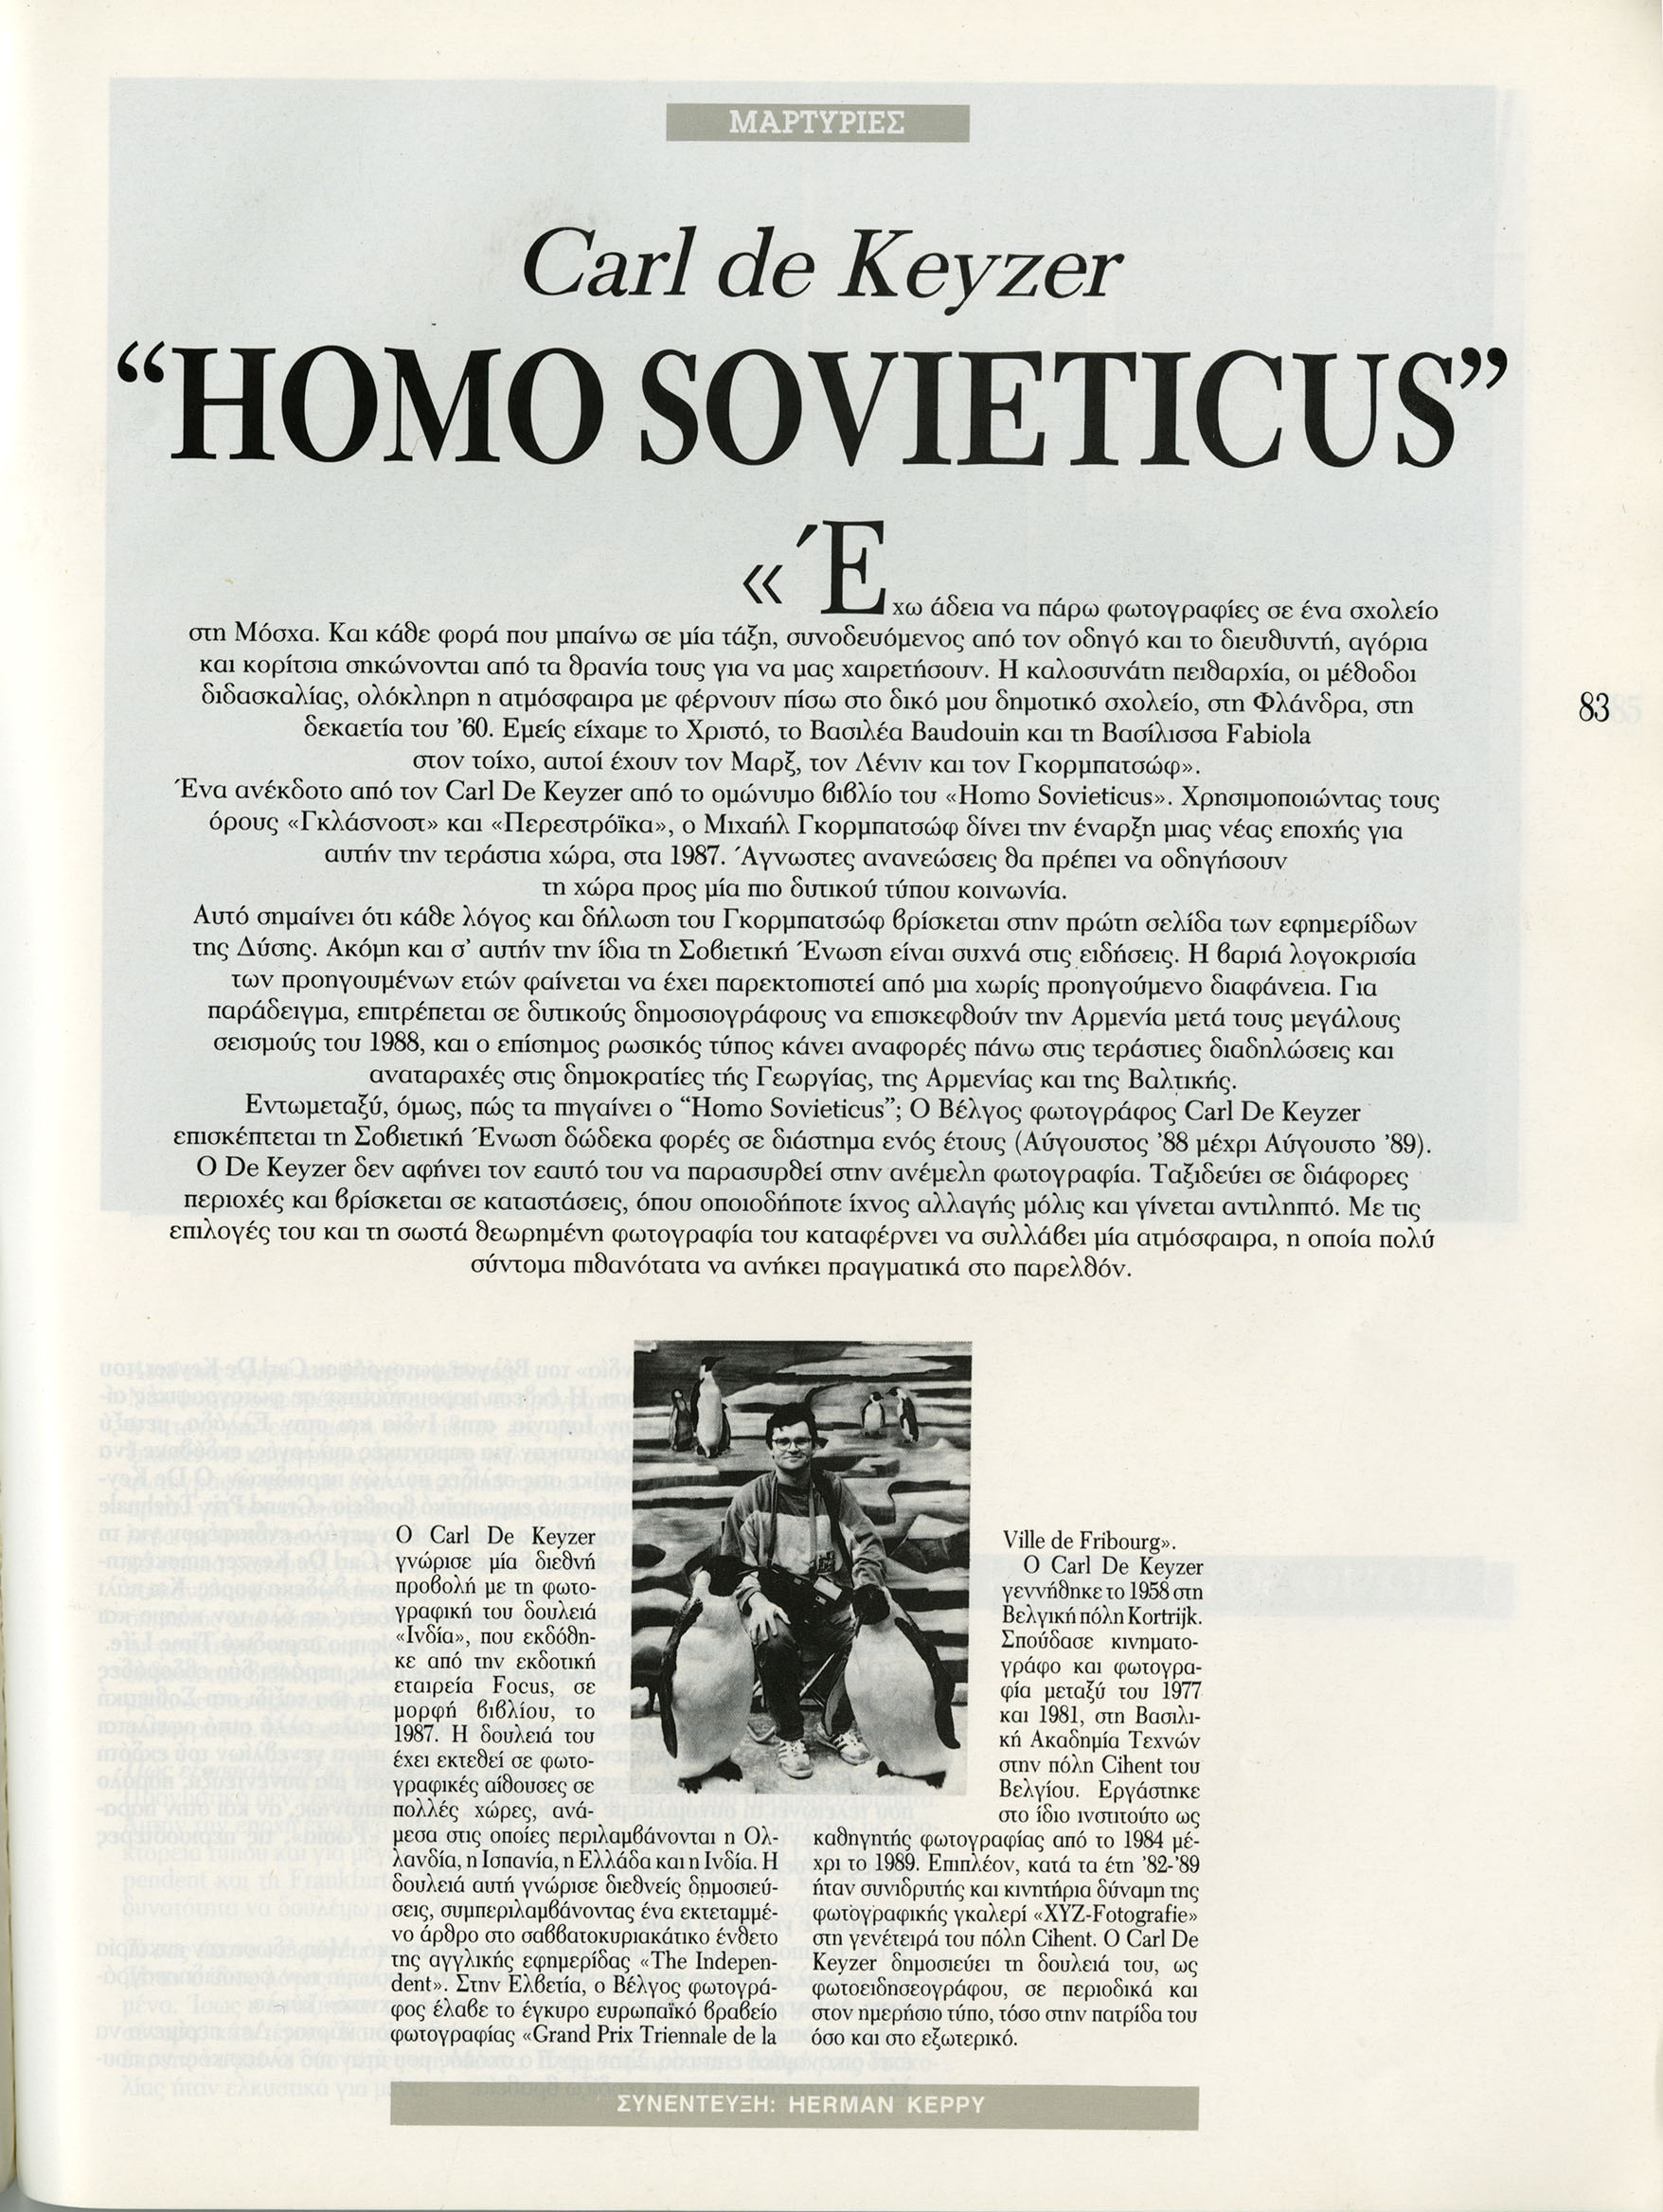 Photographia (Homo Sovieticus)